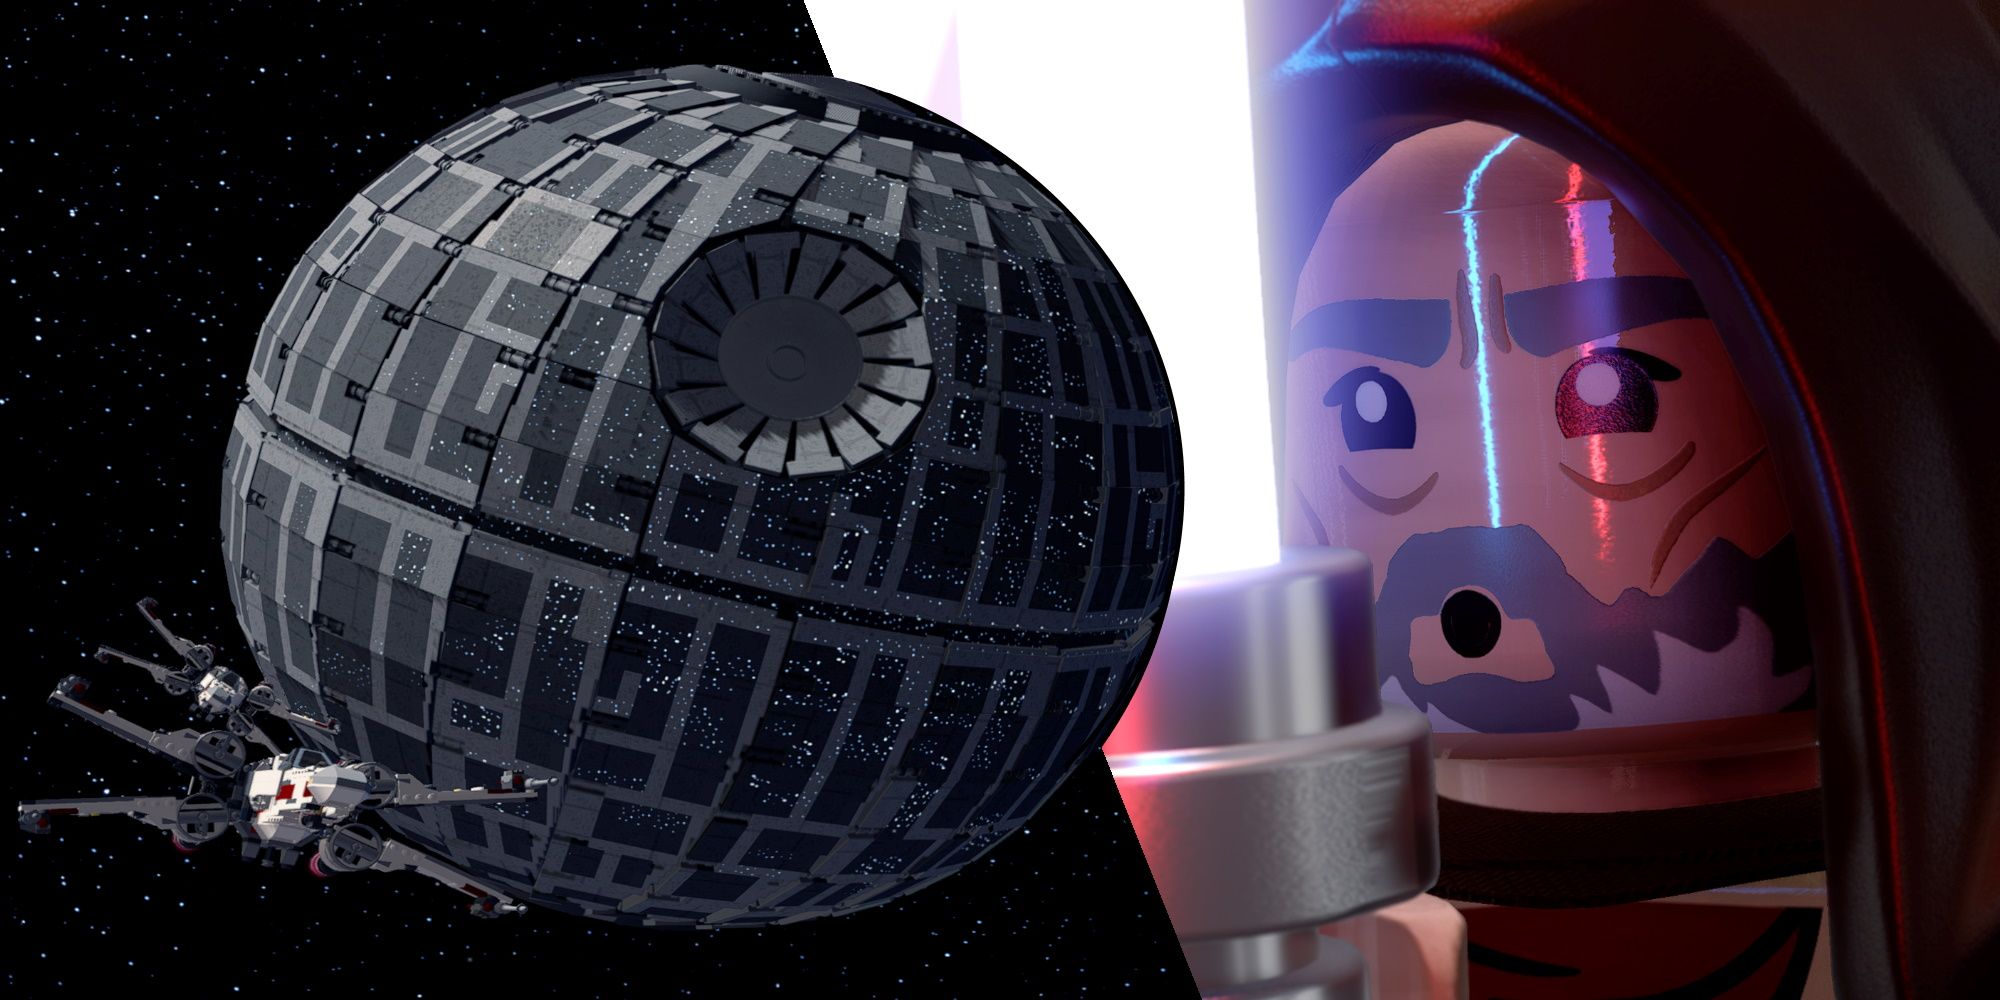 LEGO Star Wars: The Skywalker Saga beginner's guide